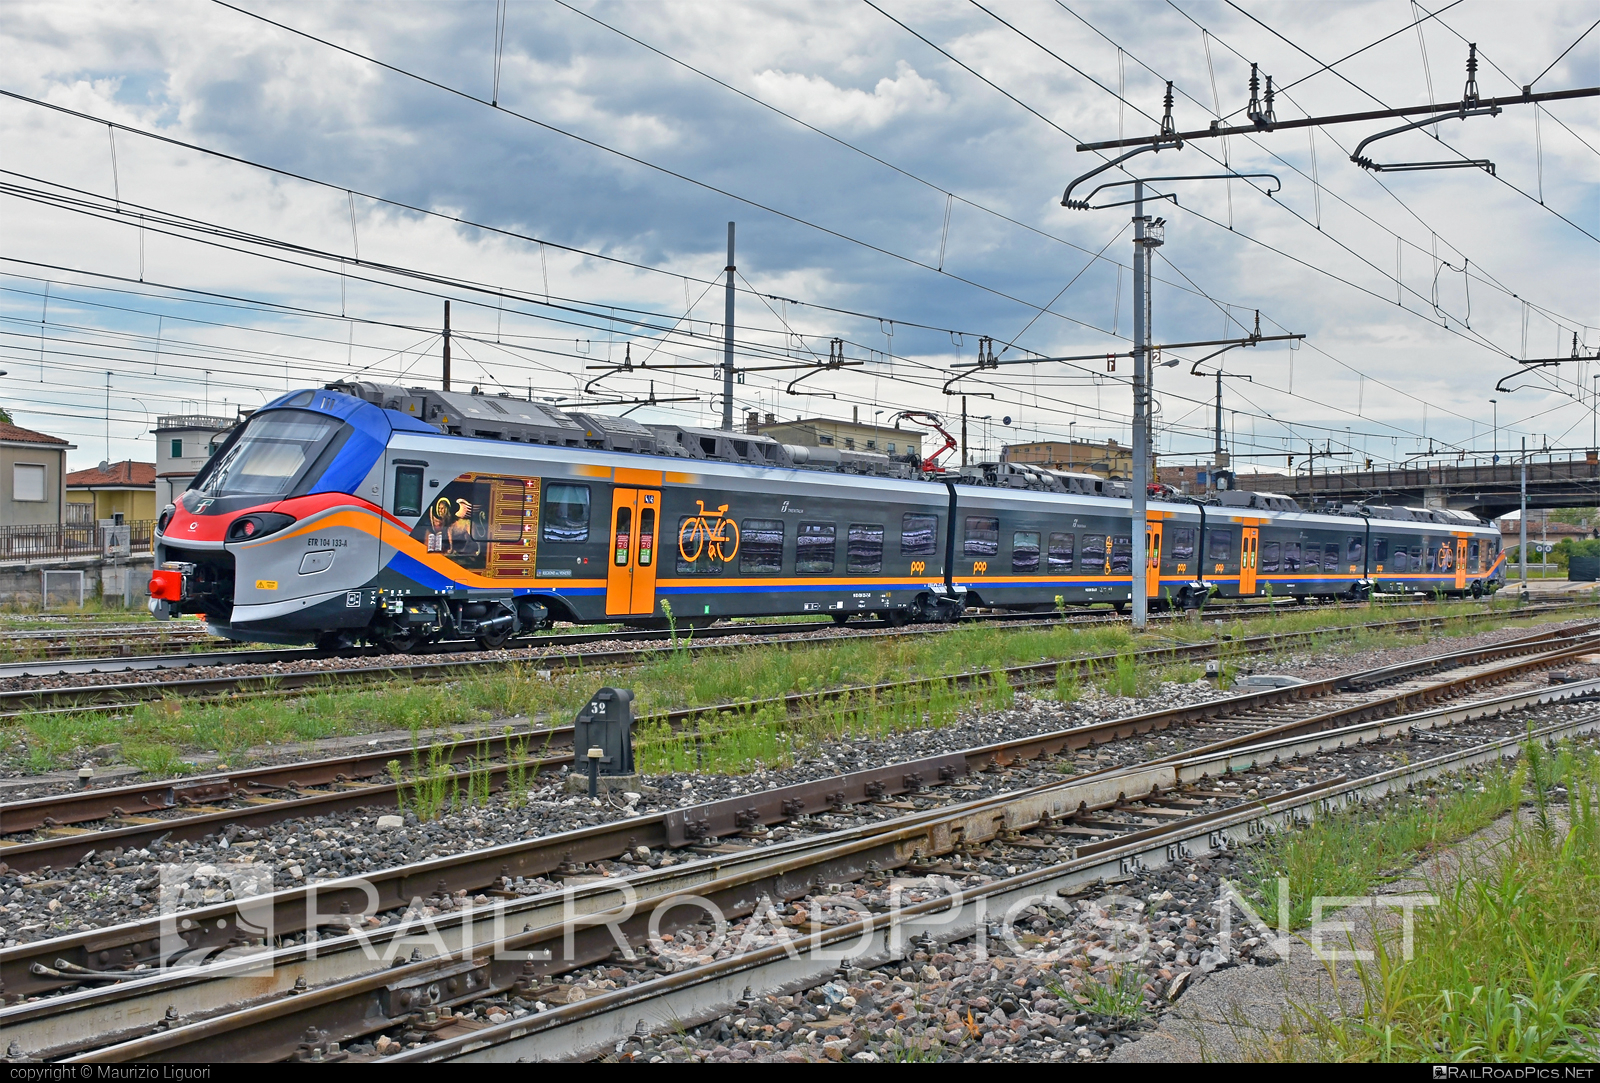 Alstom Coradia Stream ”Pop” - ETR 104 133-A operated by Trenitalia S.p.A. #alstom #alstomCoradia #coradia #coradiaStream #coradiaStreamPop #ferroviedellostato #fs #fsitaliane #pop #trenitalia #trenitaliaspa